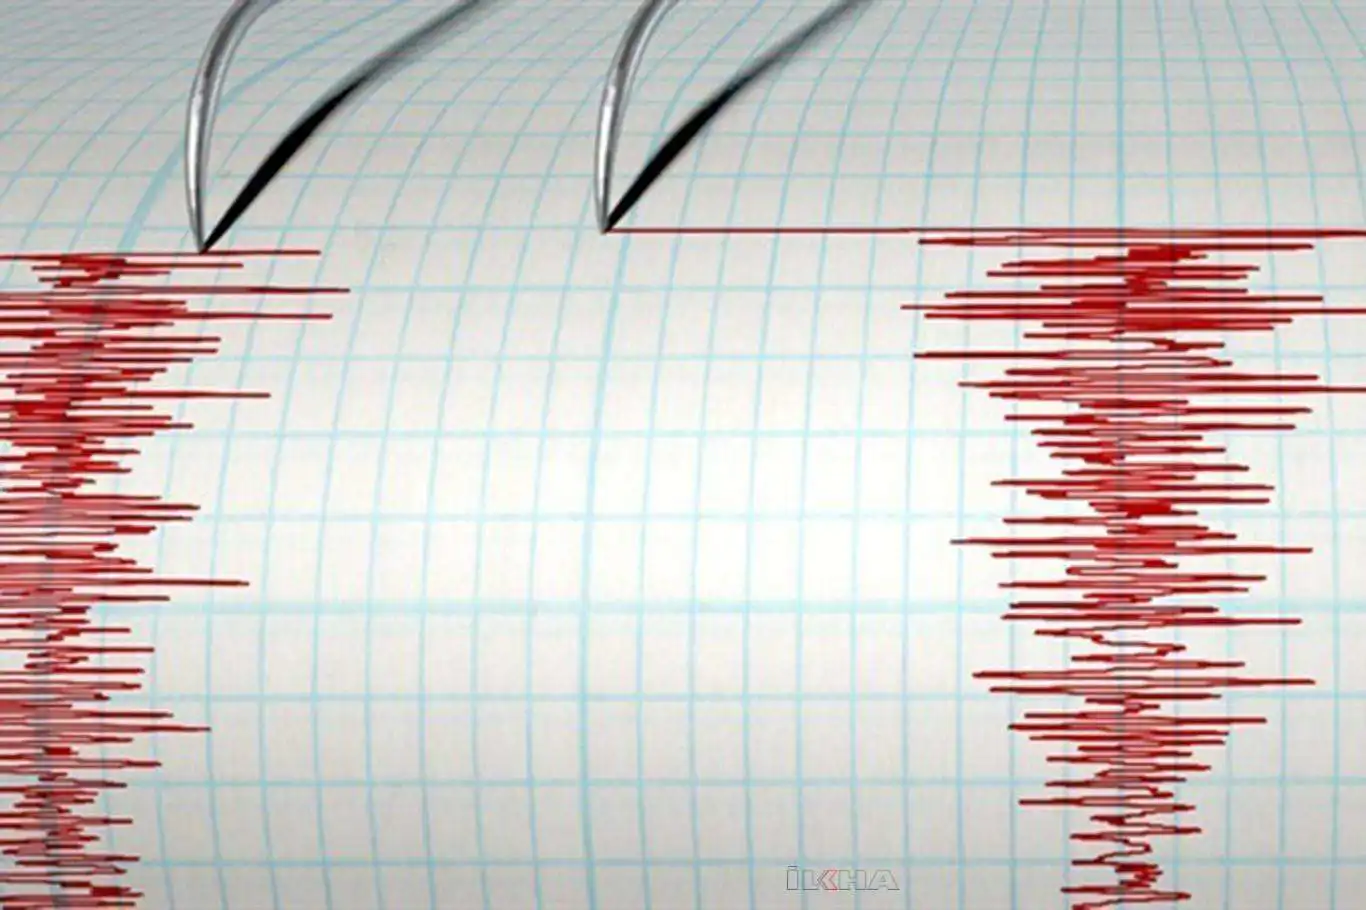 4.6 magnitude earthquake hits northwestern Türkiye